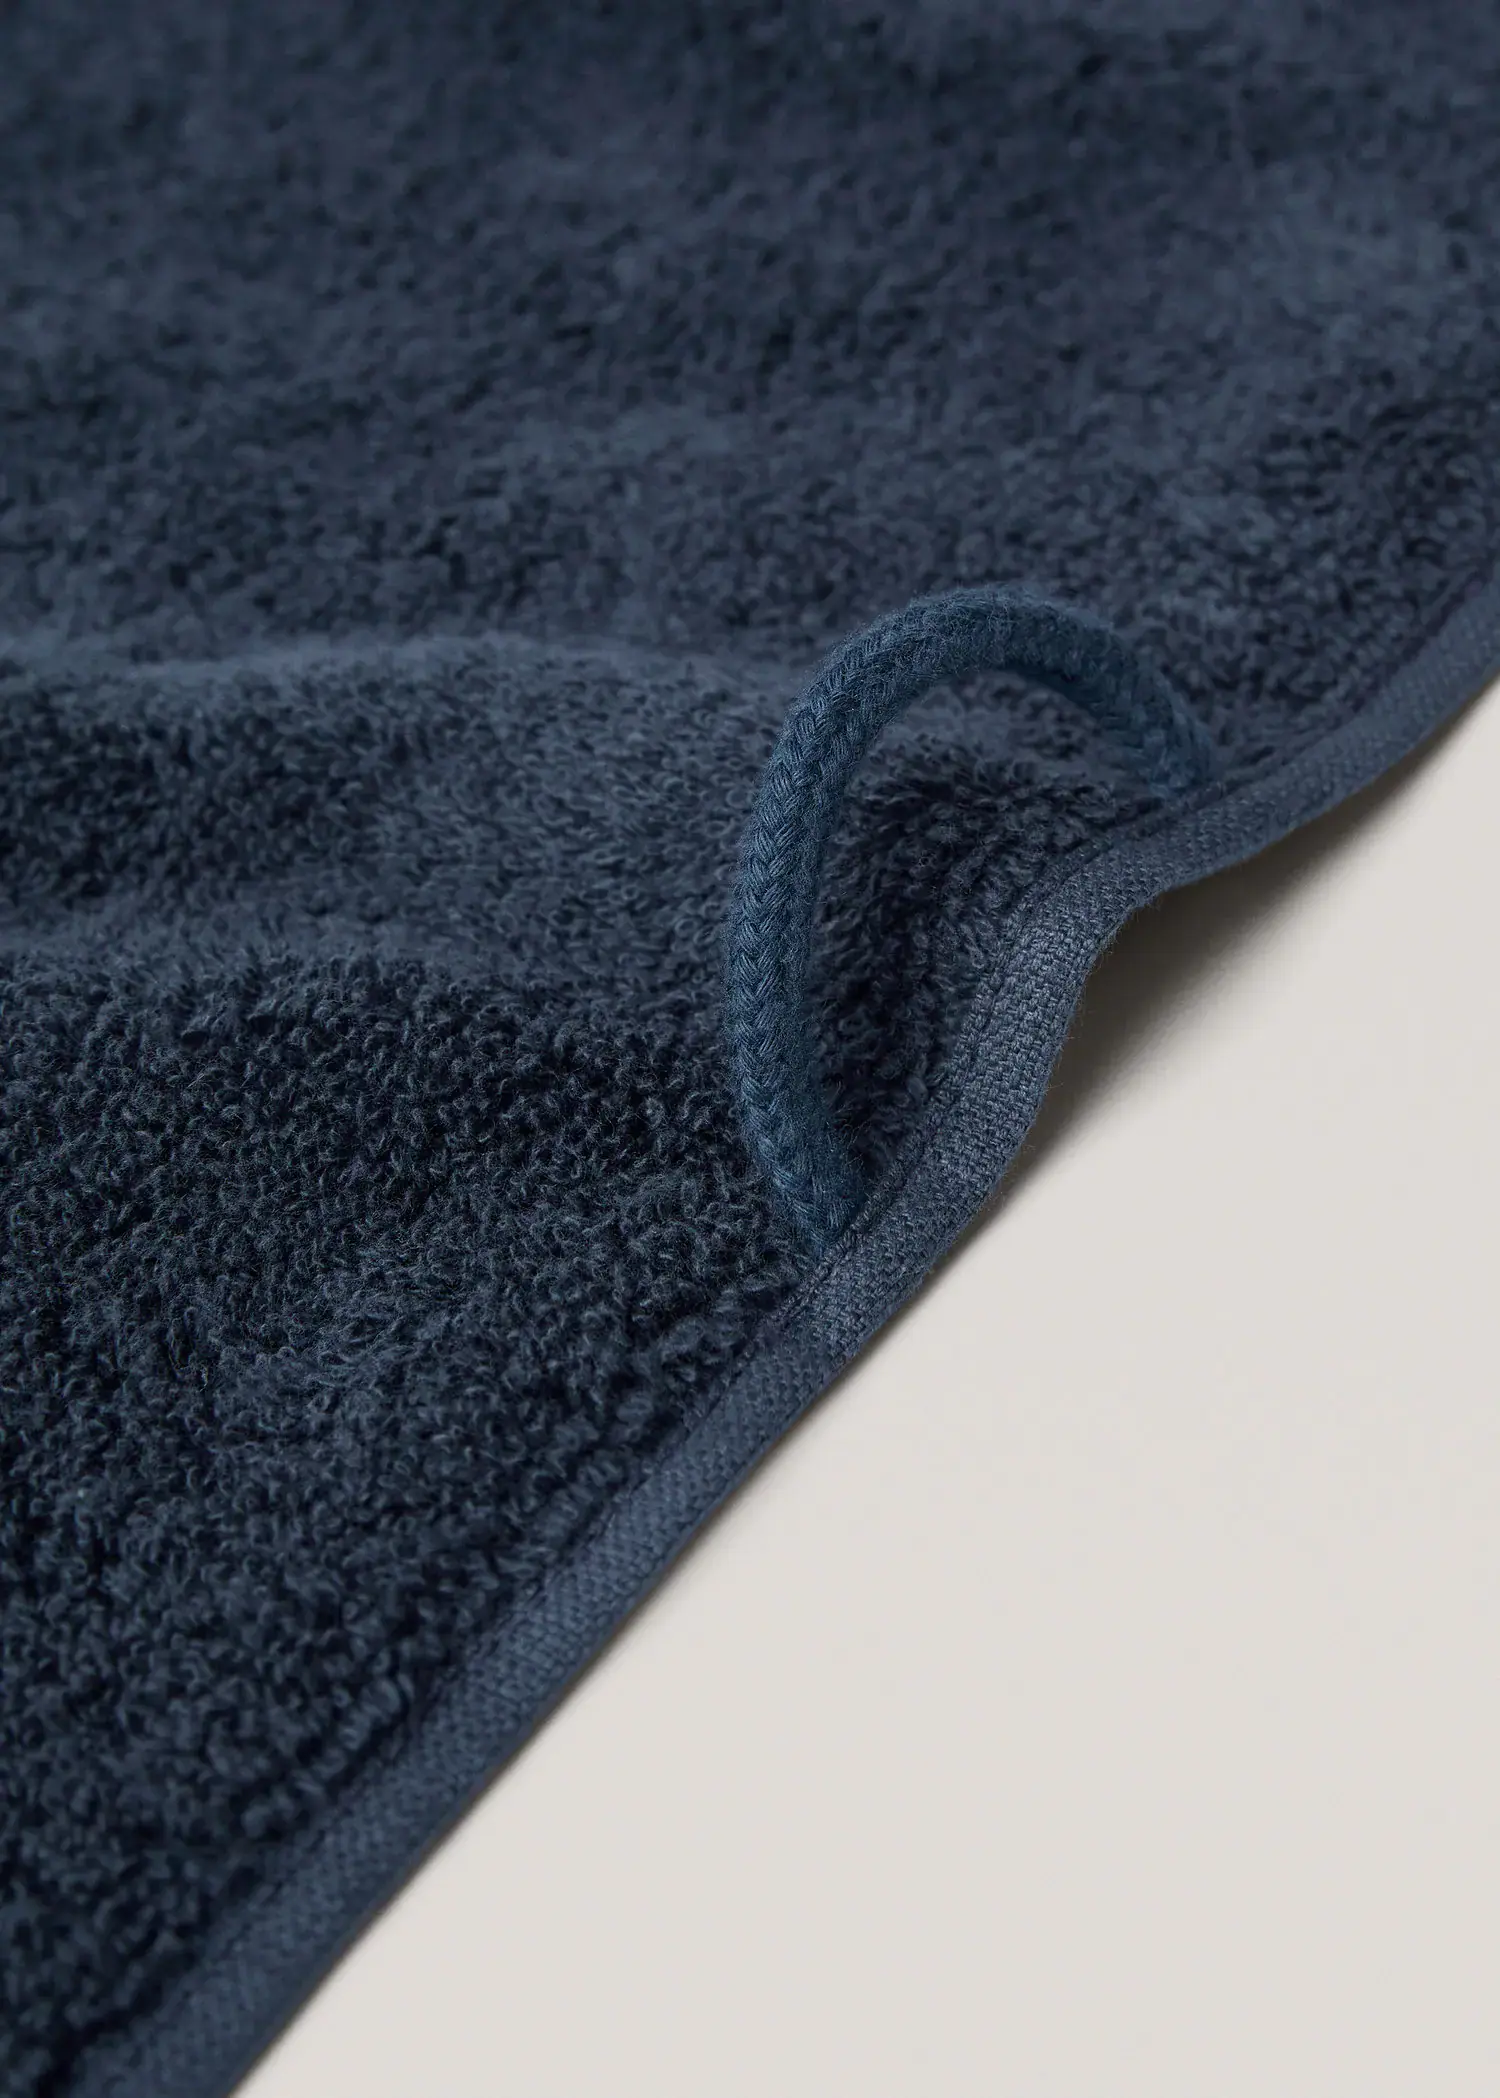 Mango 500gr/m2 cotton bath towel 90x150cm. 3